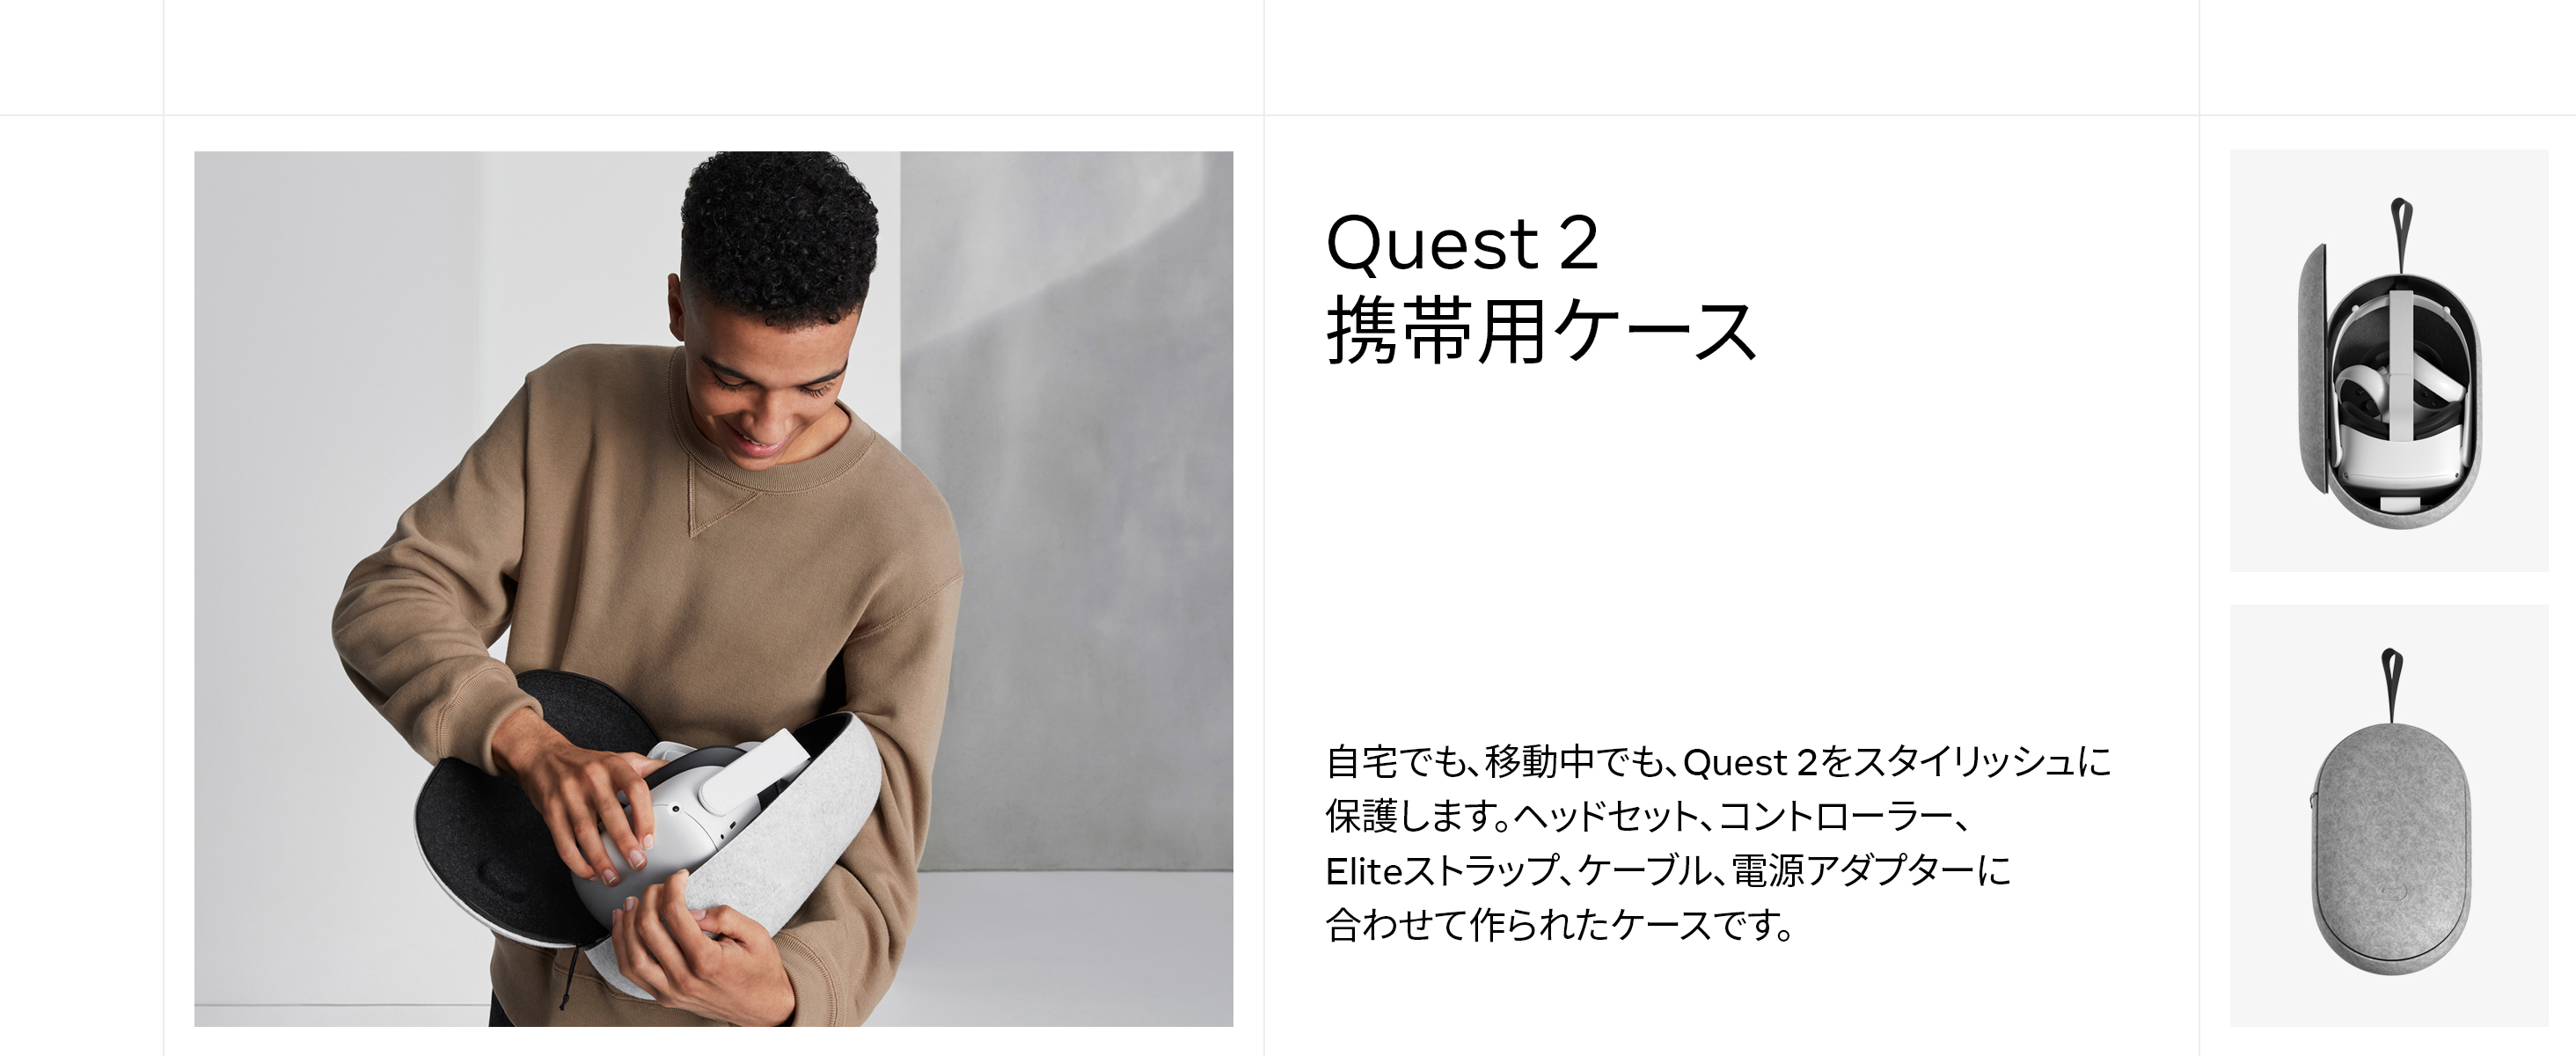 Meta Quest2 携帯用ケース 自宅でも、移動中でも、Quest2をスタイリッシュに守ります。